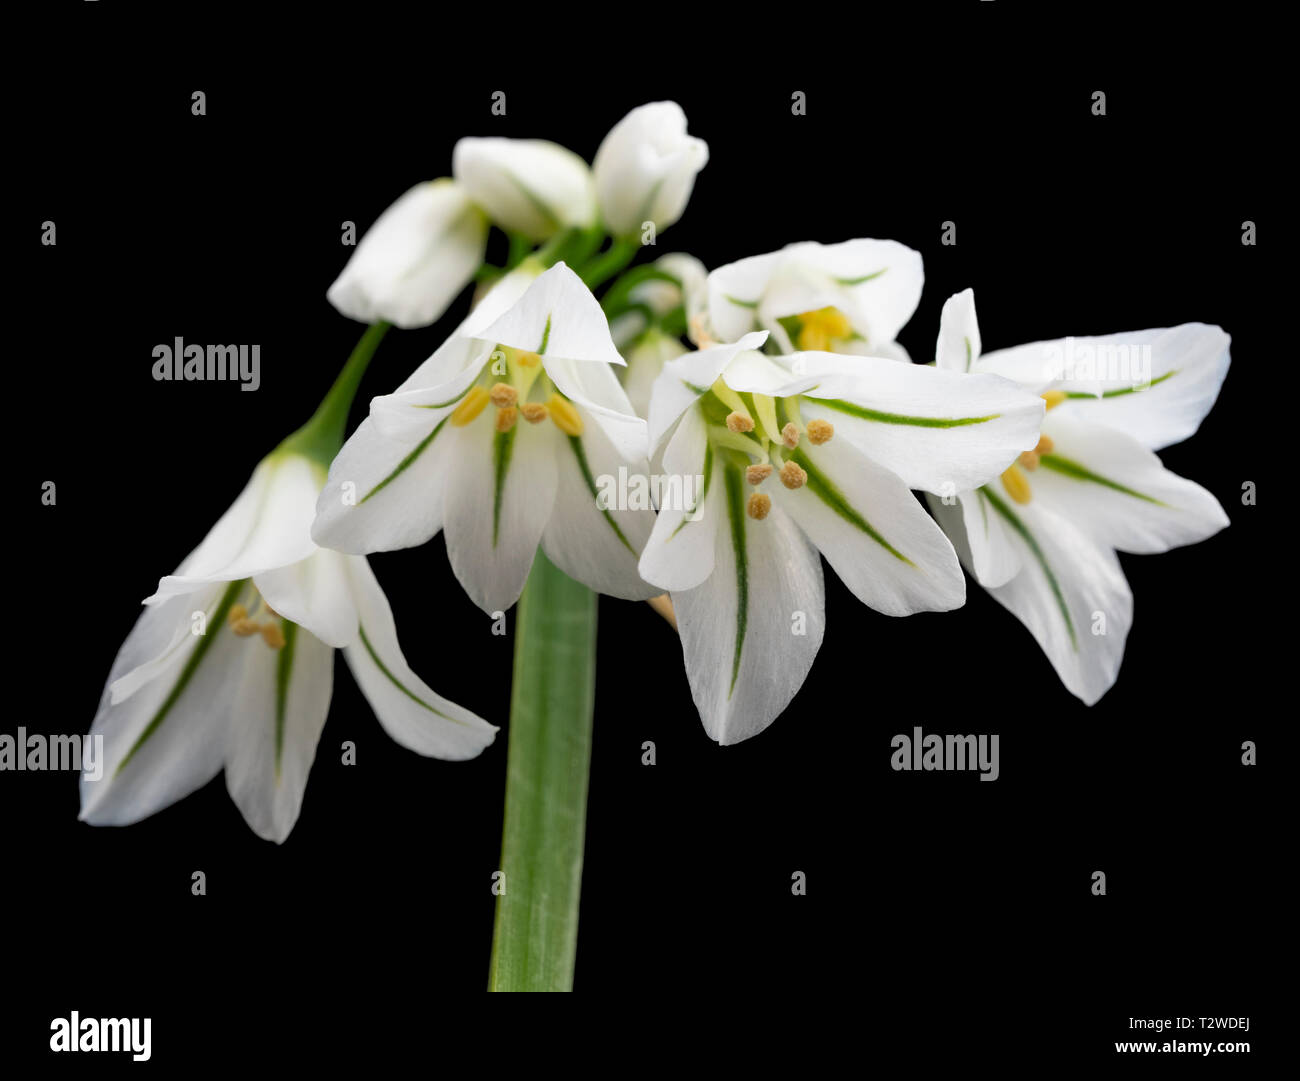 Three cornered leek, Allium triquetrum, early spring flowers against a black background Stock Photo